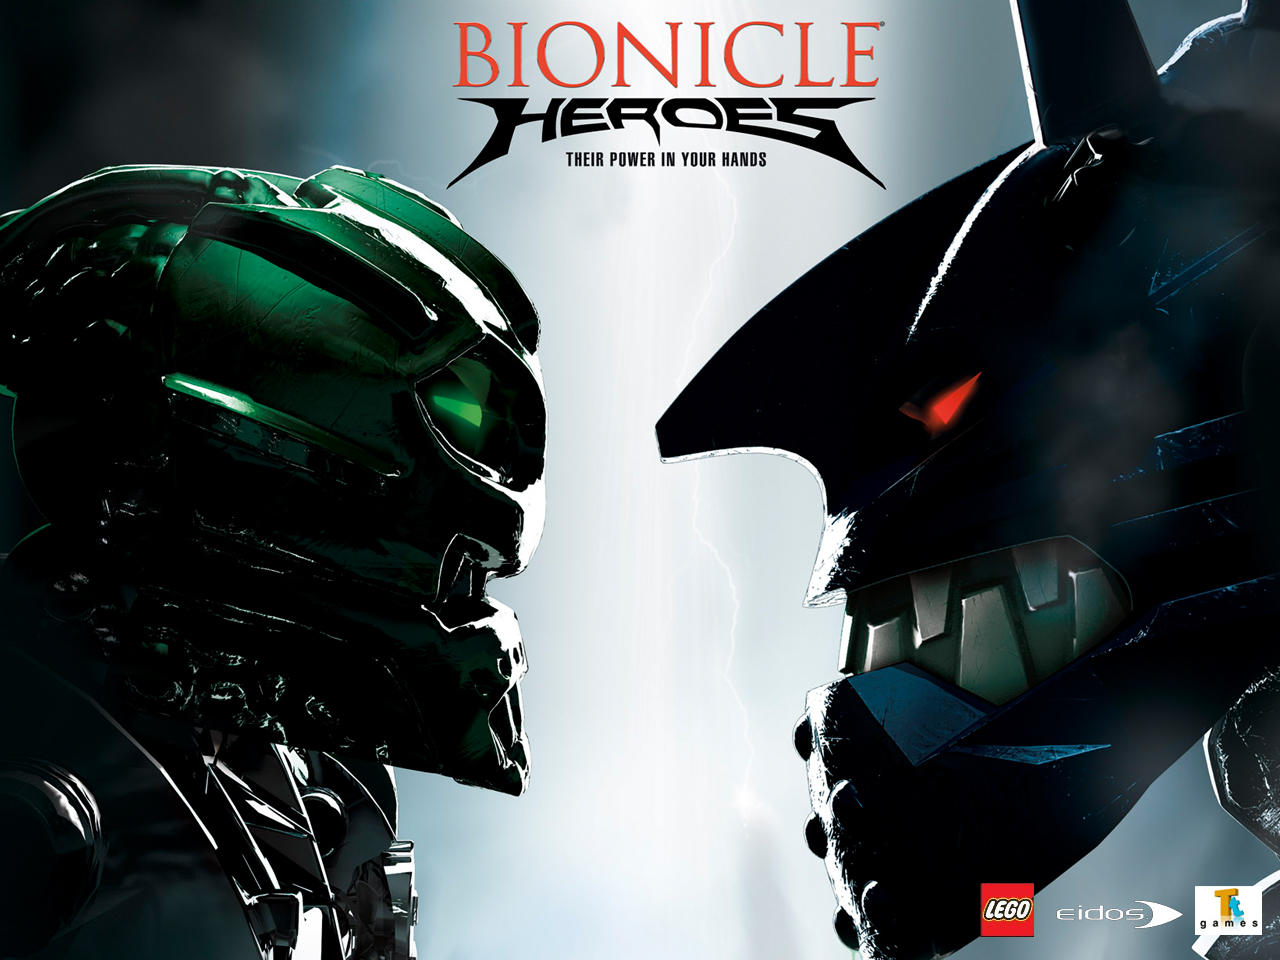 size200] Bionicle Heroes Crack Vitality [size]